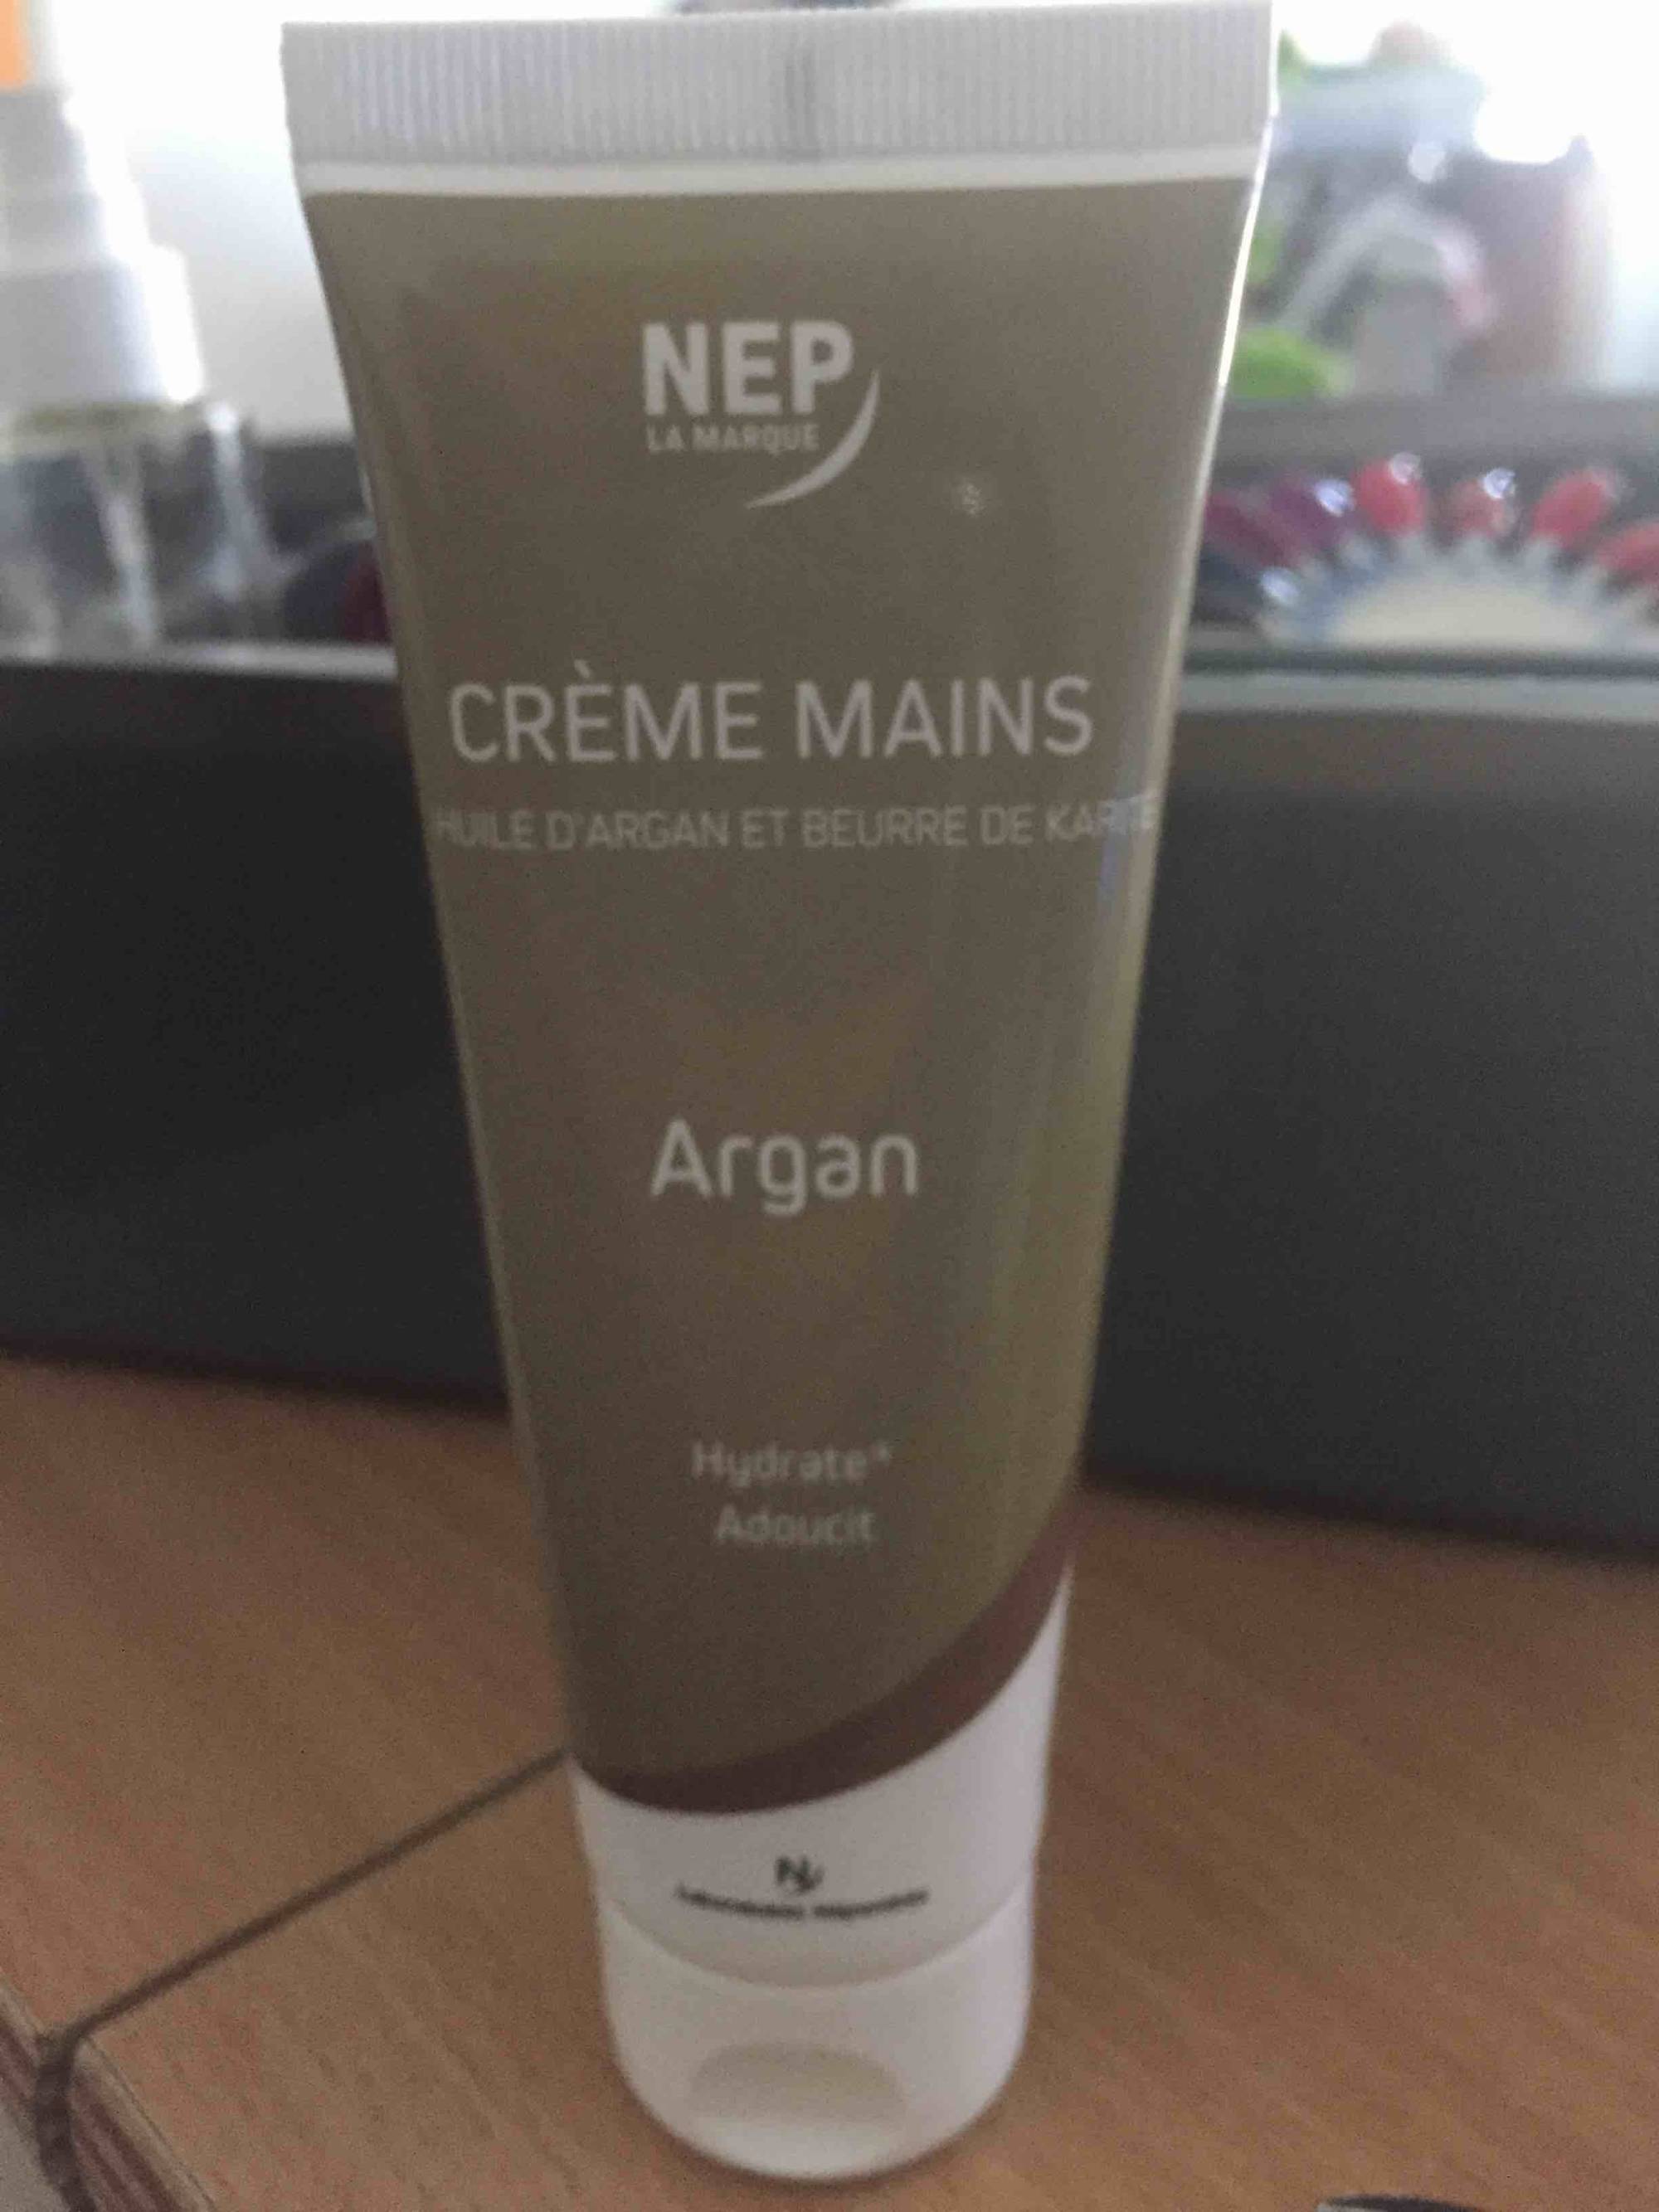 NEP - Crème mains argan